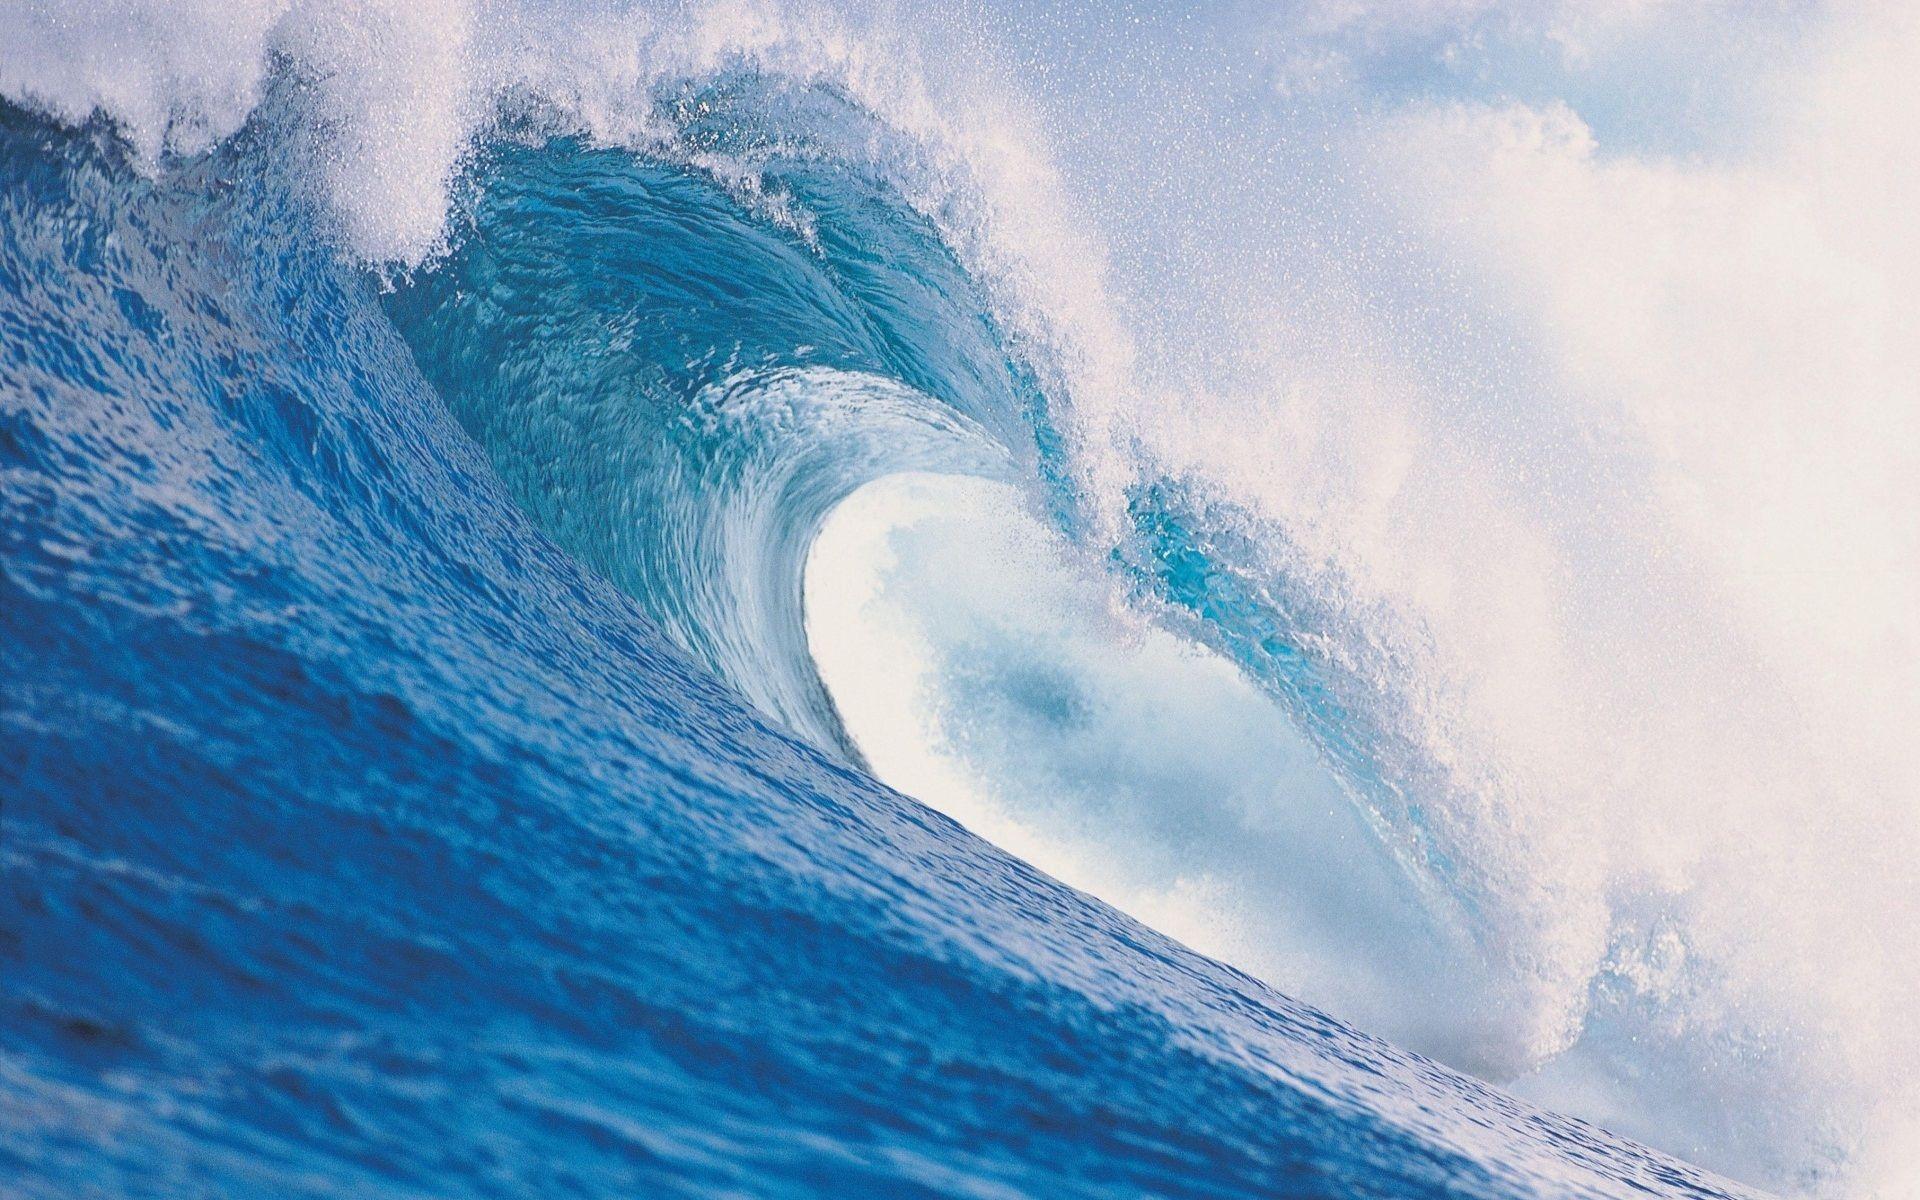 Sea Waves Wallpaper 31007 1920x1200 px